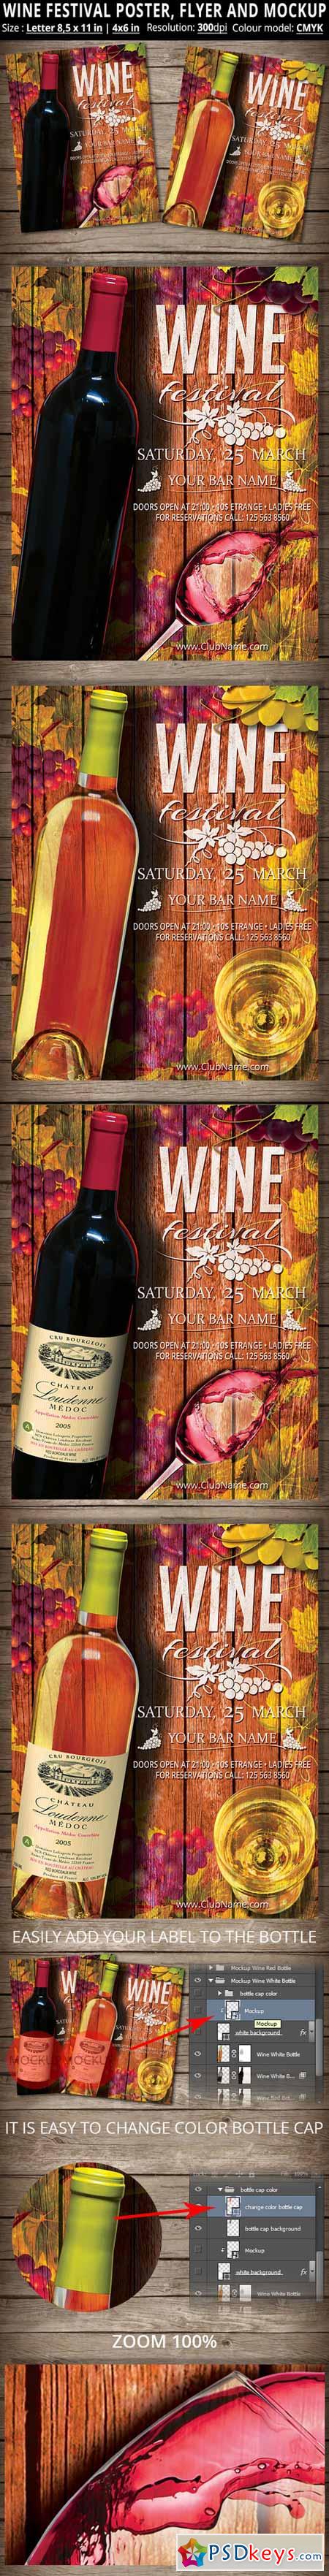 Wine Festival Poster, Flyer, Mockup 479627